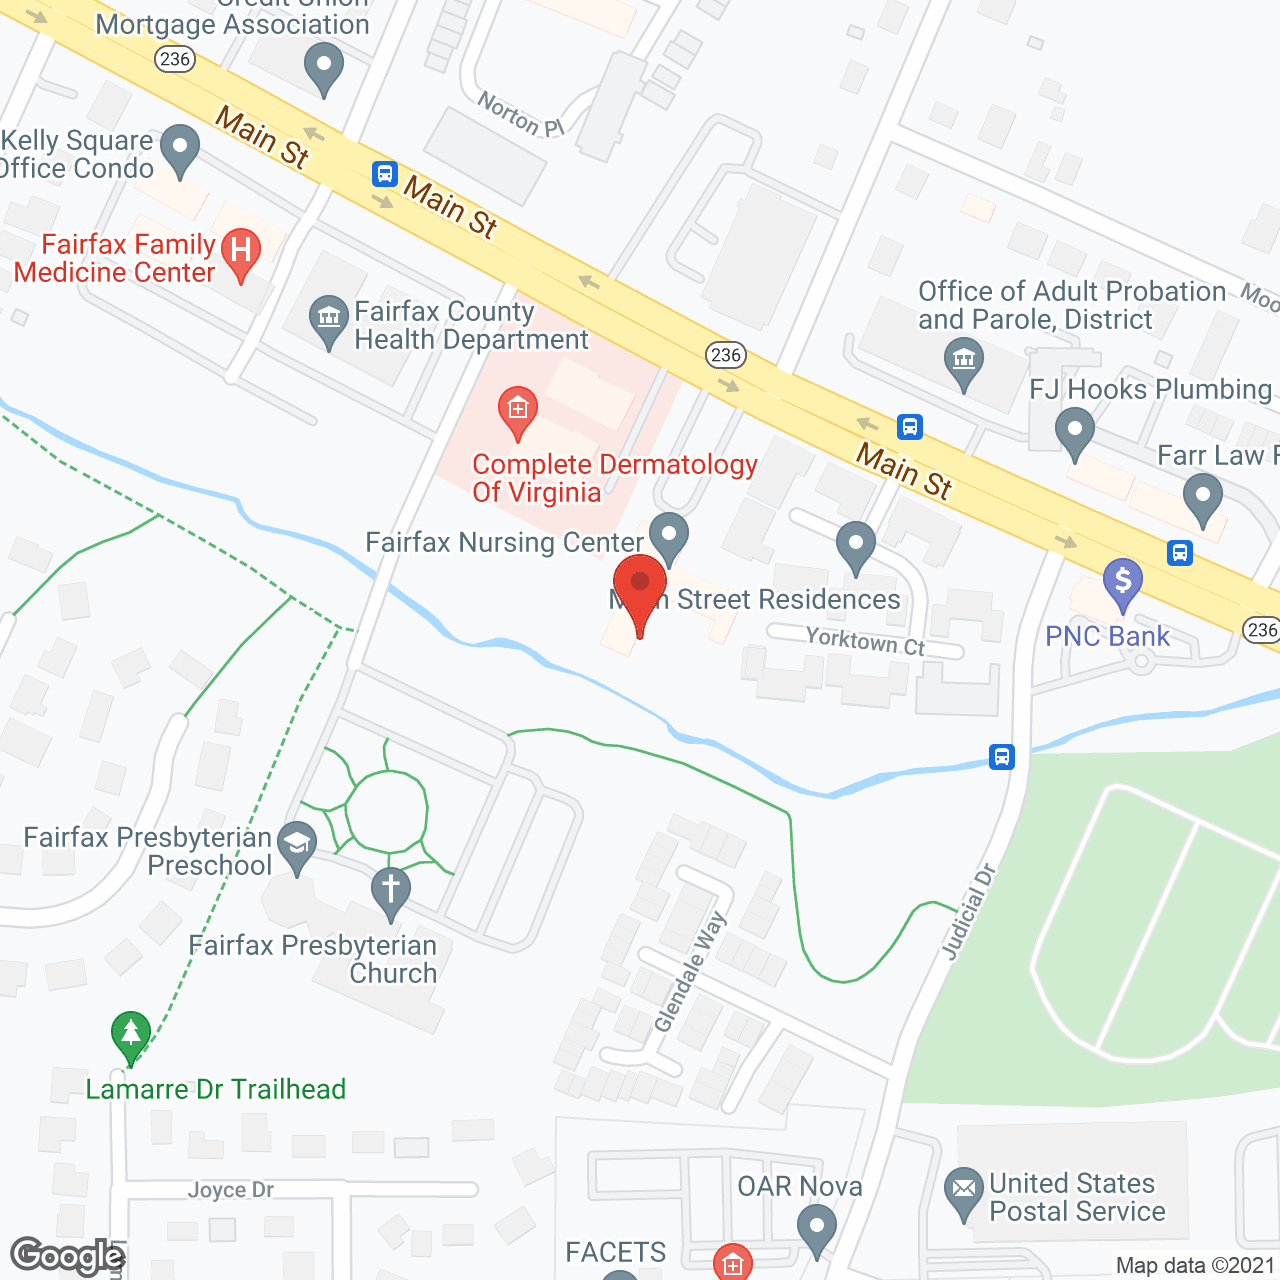 Fairfax Rehabilitation and Nursing Center in google map